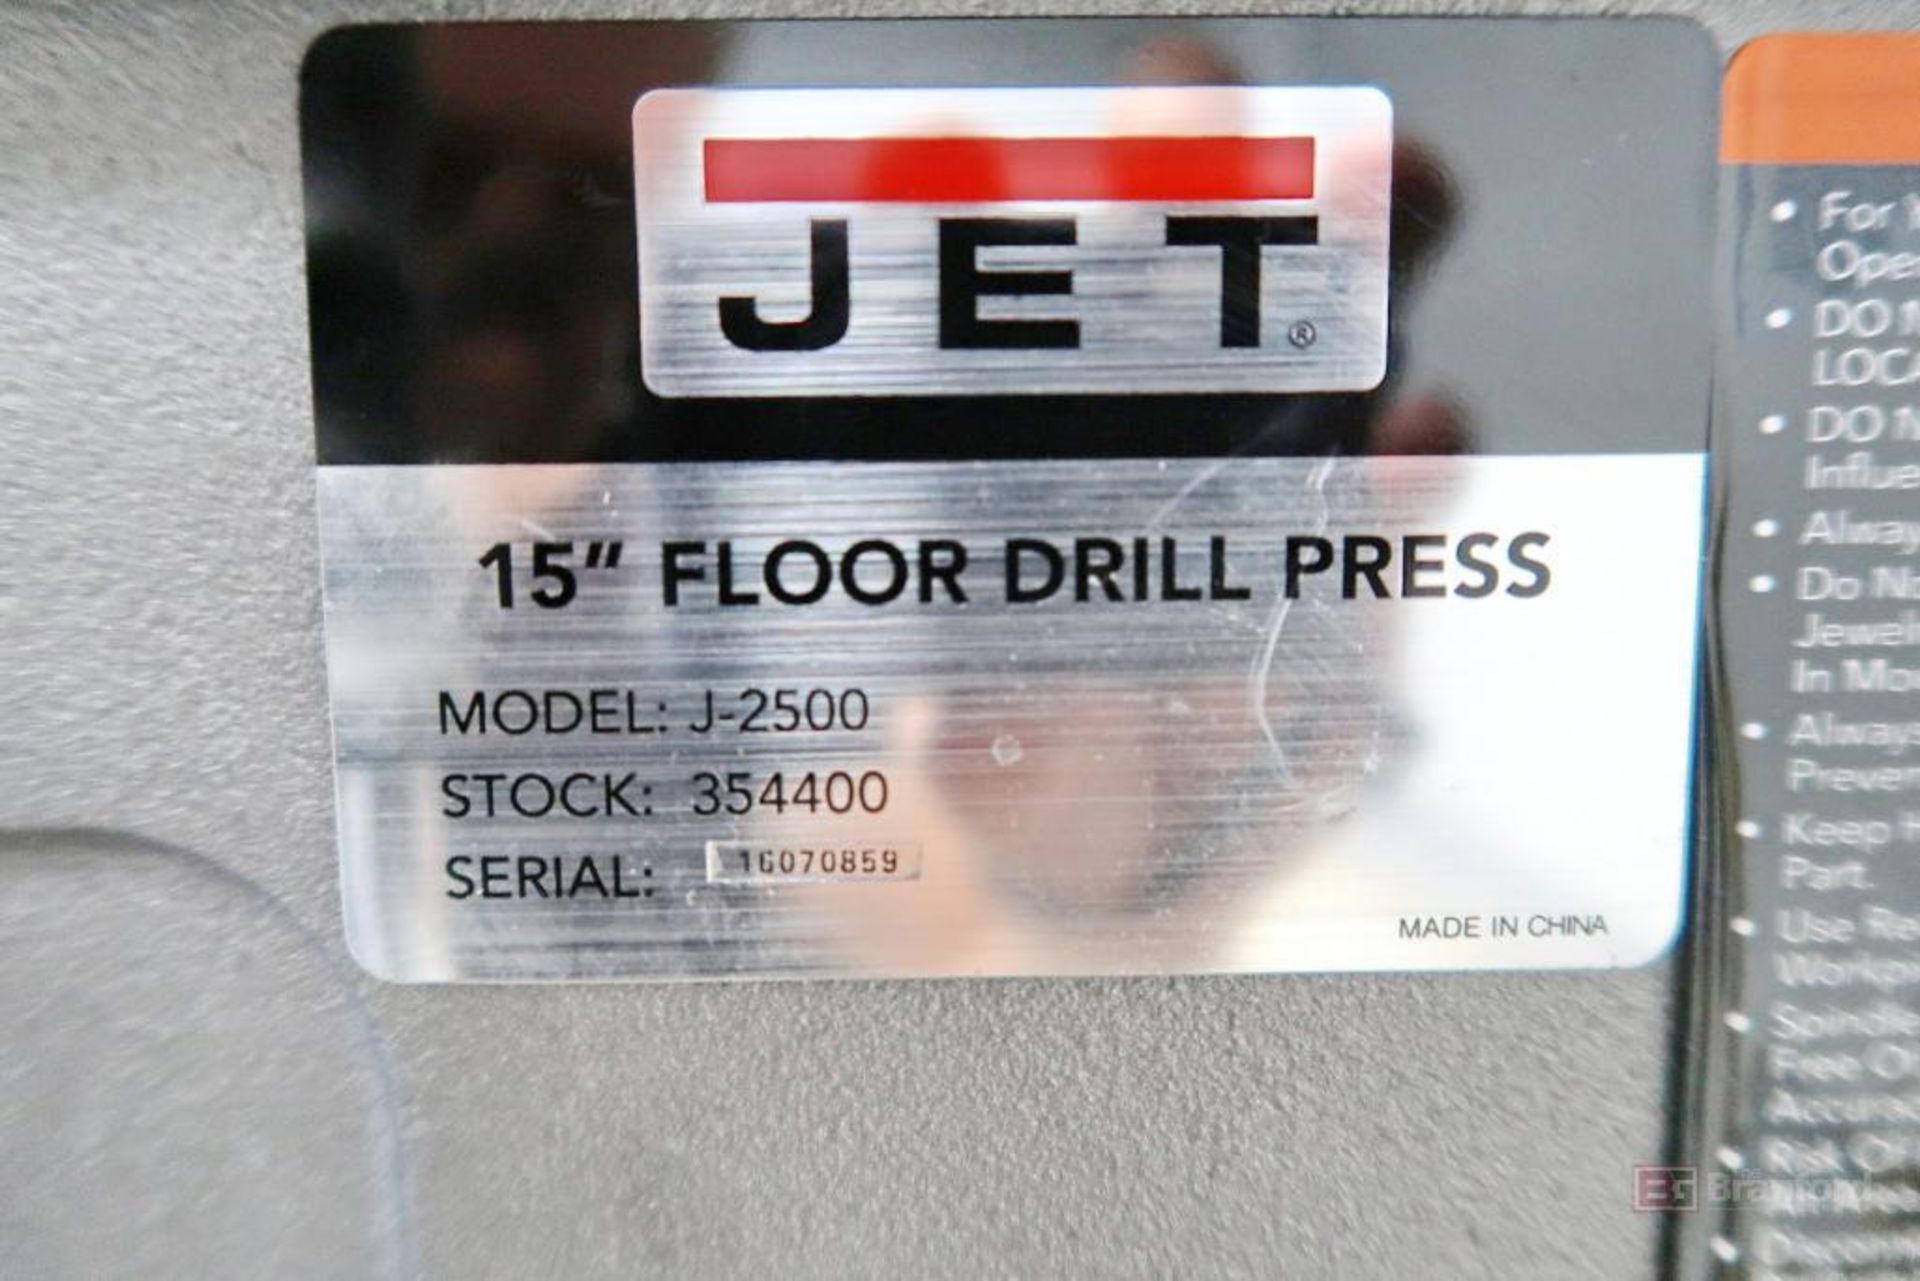 Jet 15" Floor Drill Press Model J-2500 - Image 3 of 4